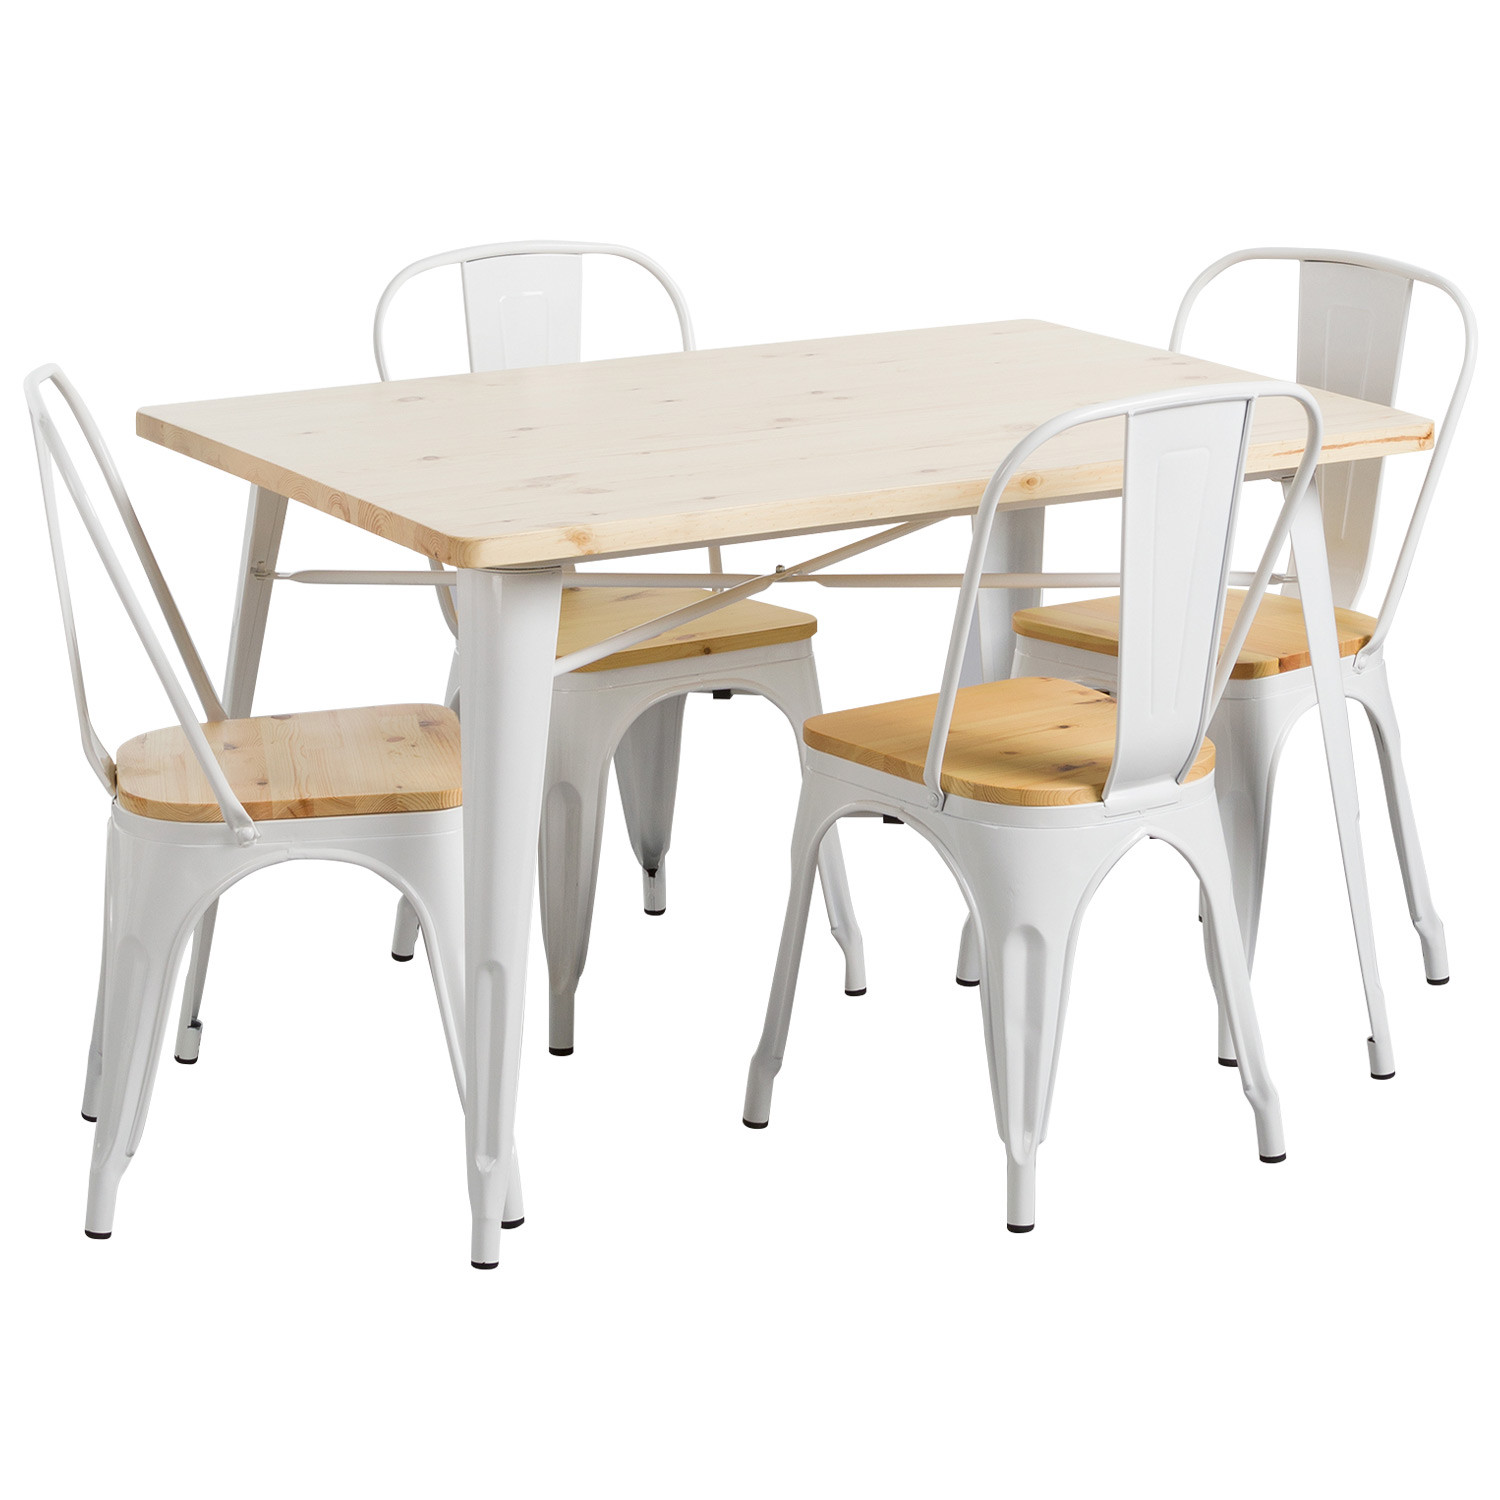 Conjunto de jantar Mesa retangular e 4 cadeiras Madeira de ferro Estilo industrial Thinia Home Conjunto de mesa e cadeira de jan